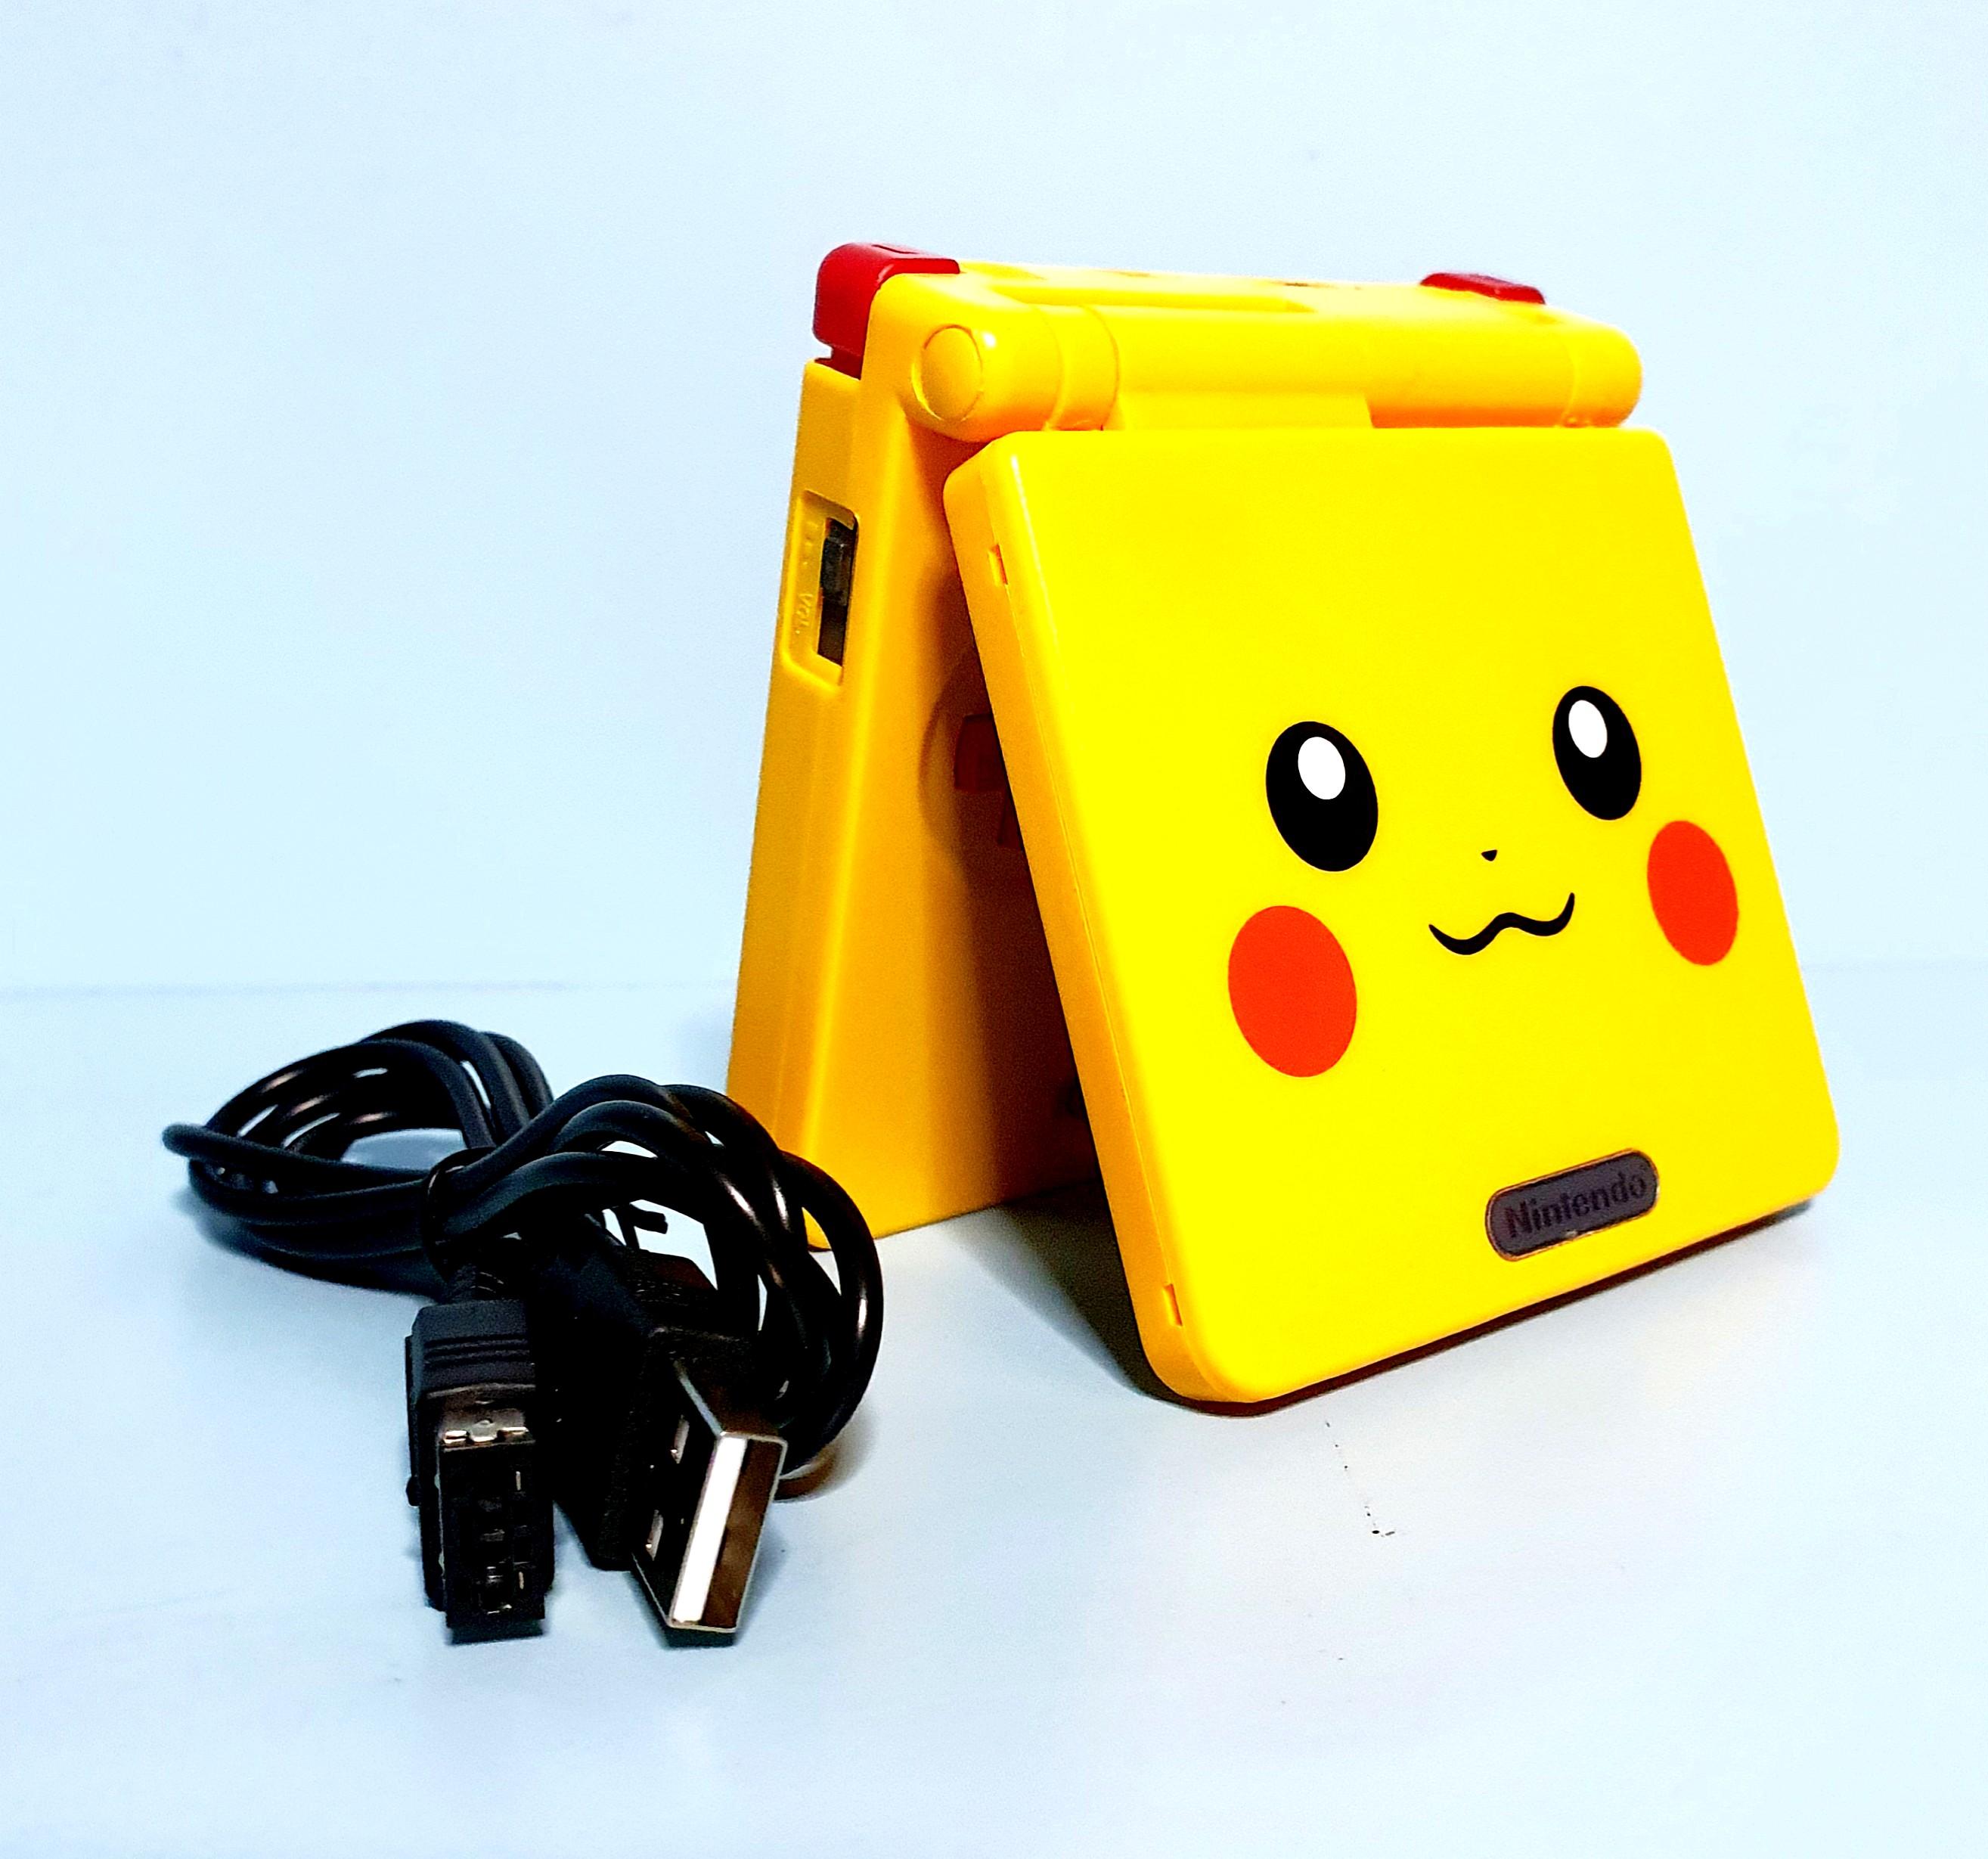 gameboy advance sp pikachu edition